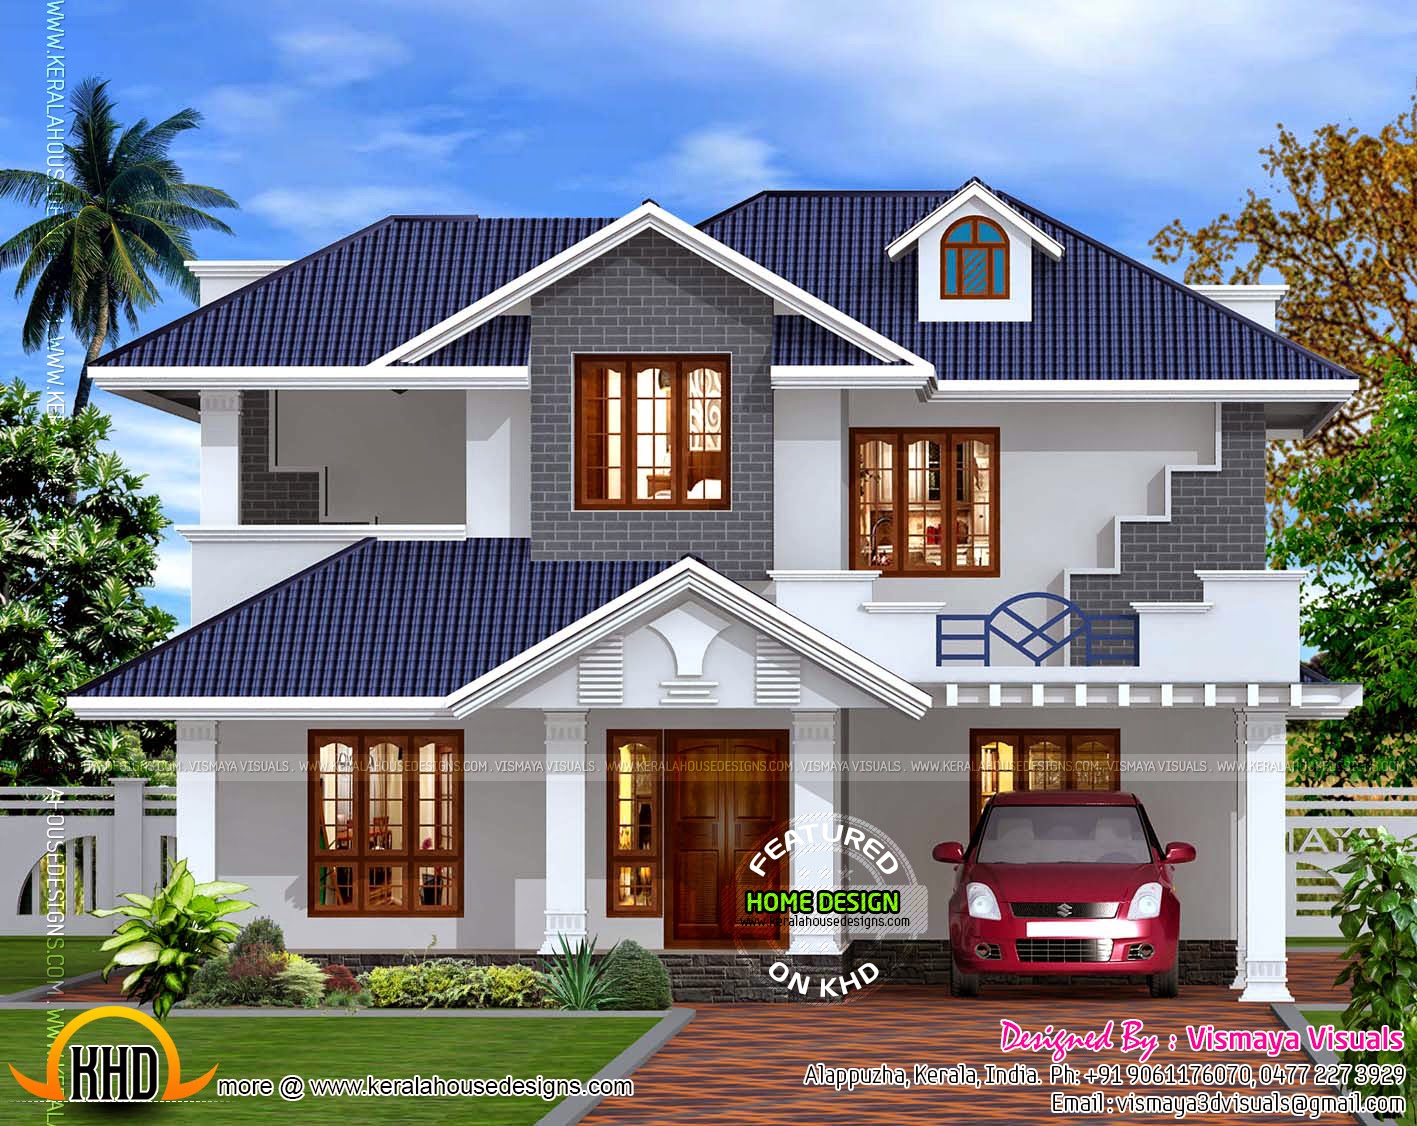 Kerala style villa exterior - Kerala home design and floor ...